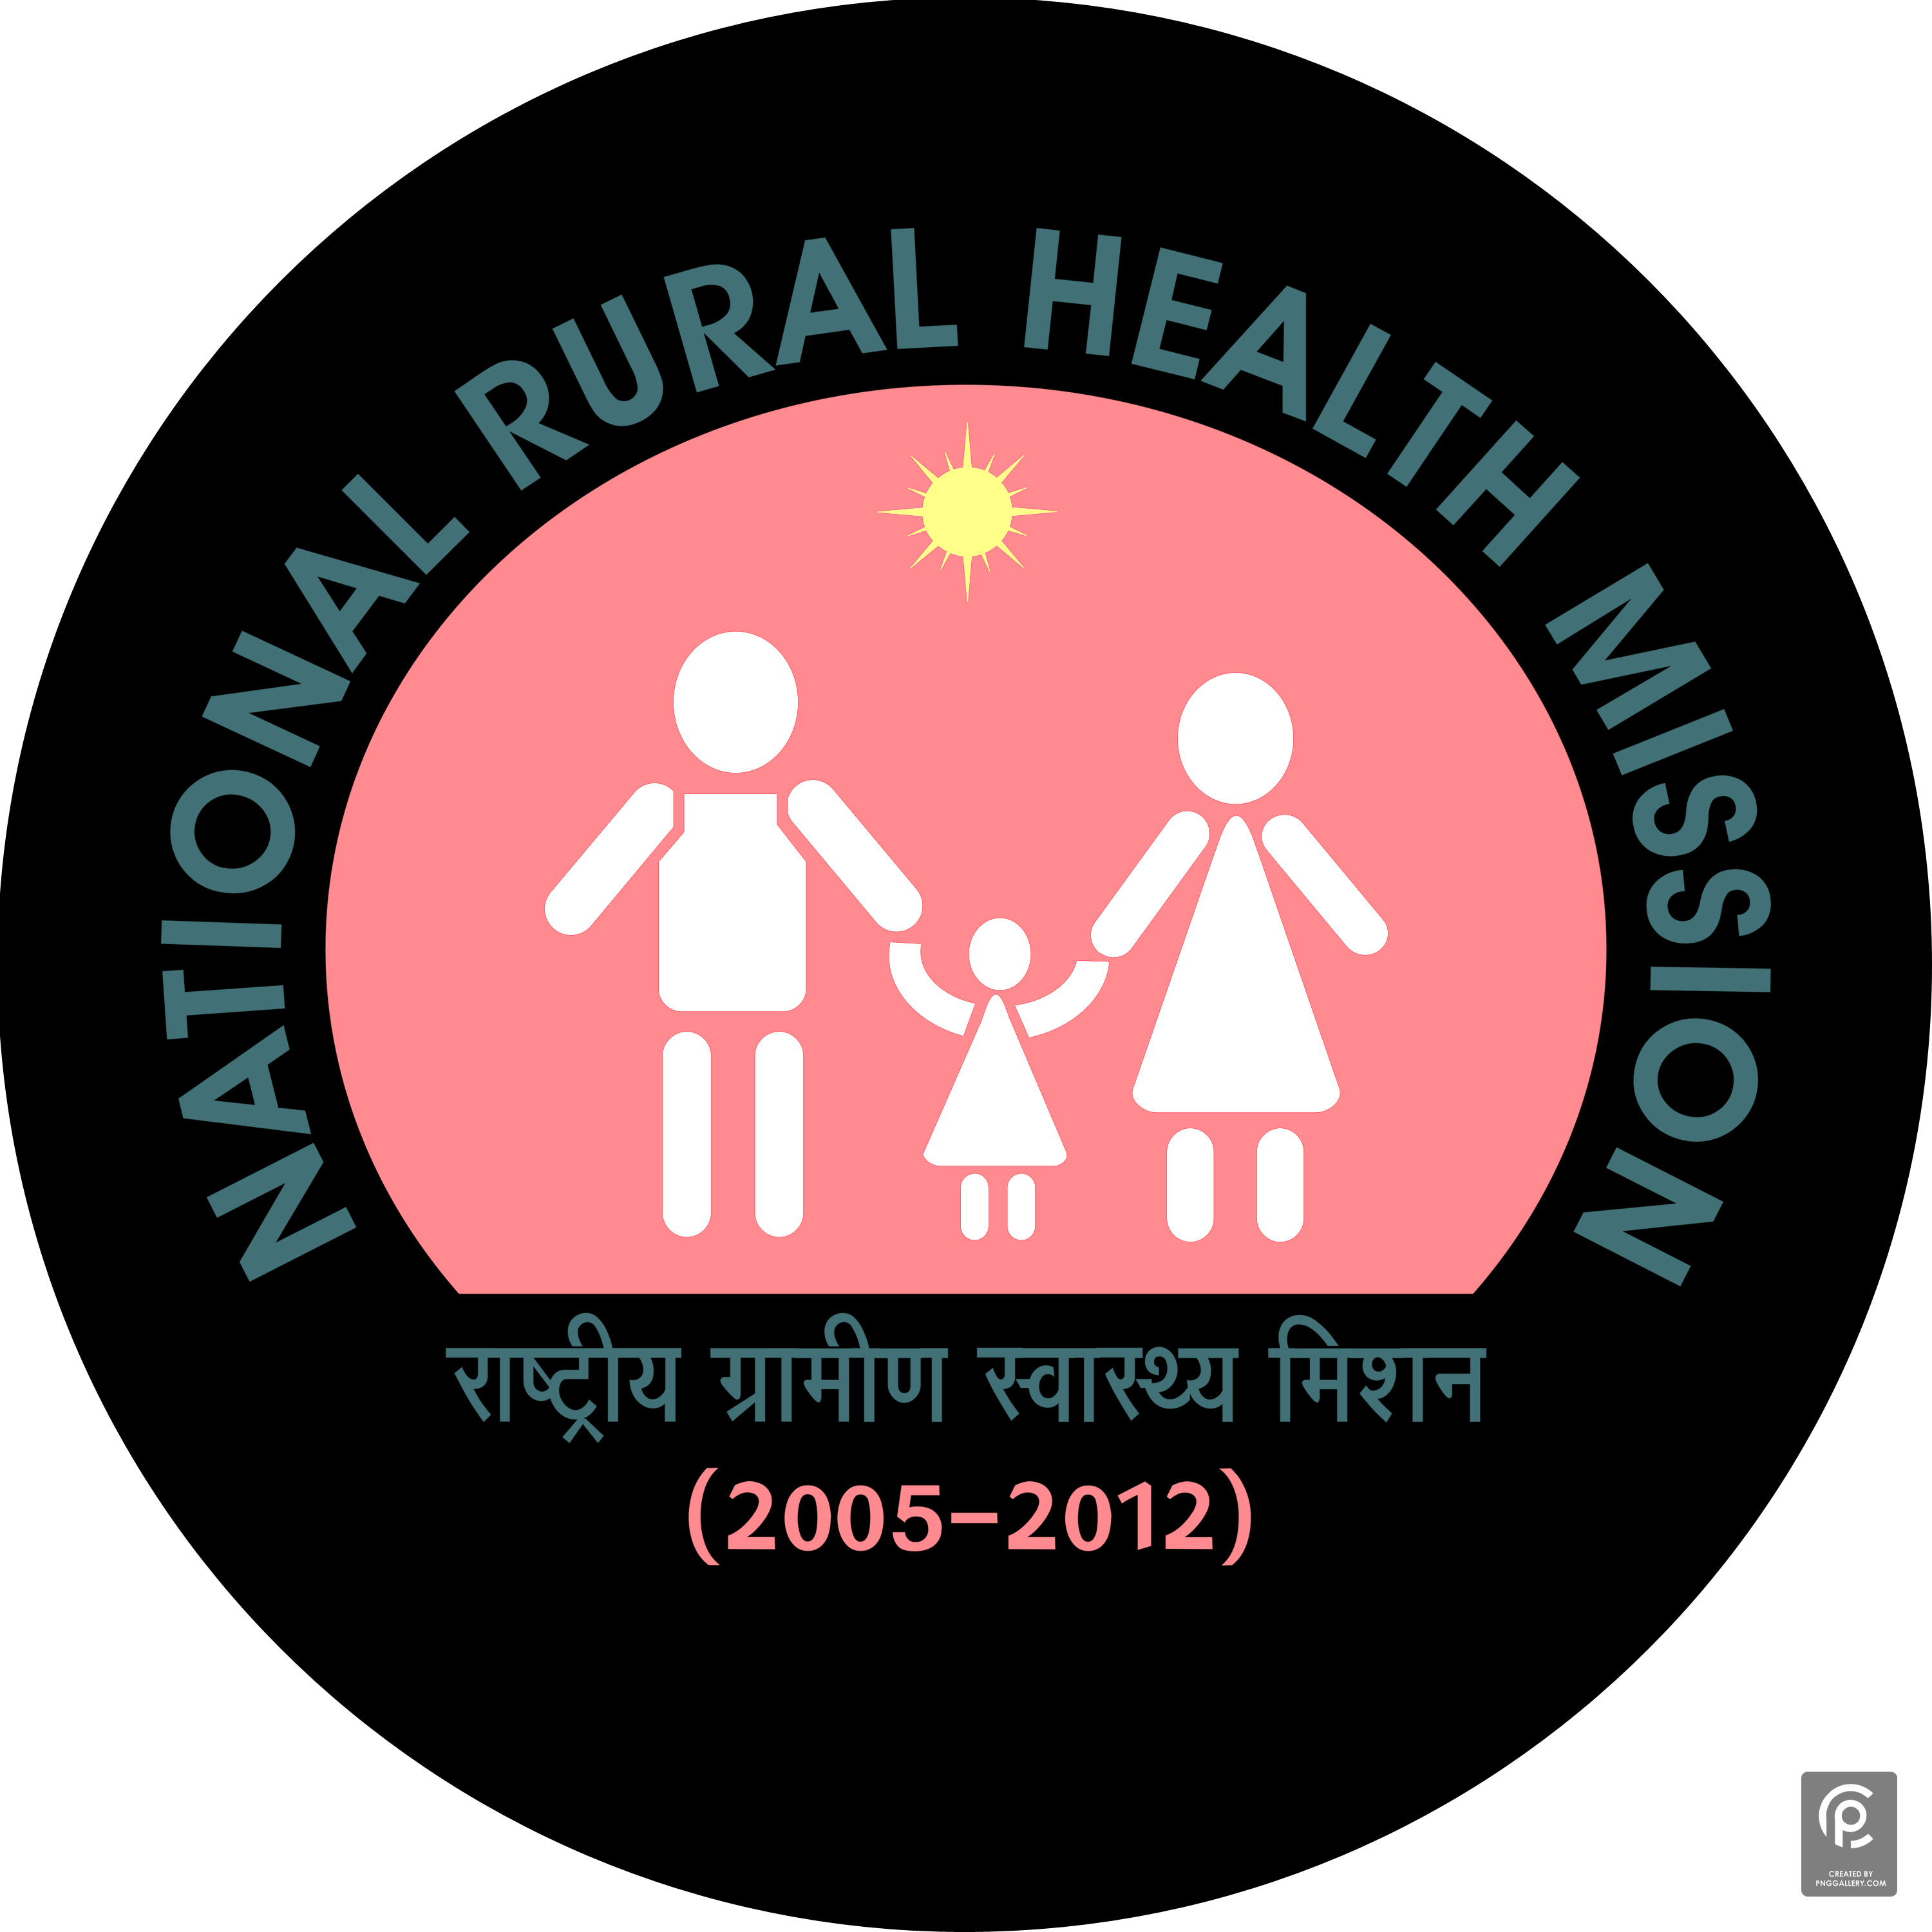 National Rural Health Mission Logo Transparent Gallery